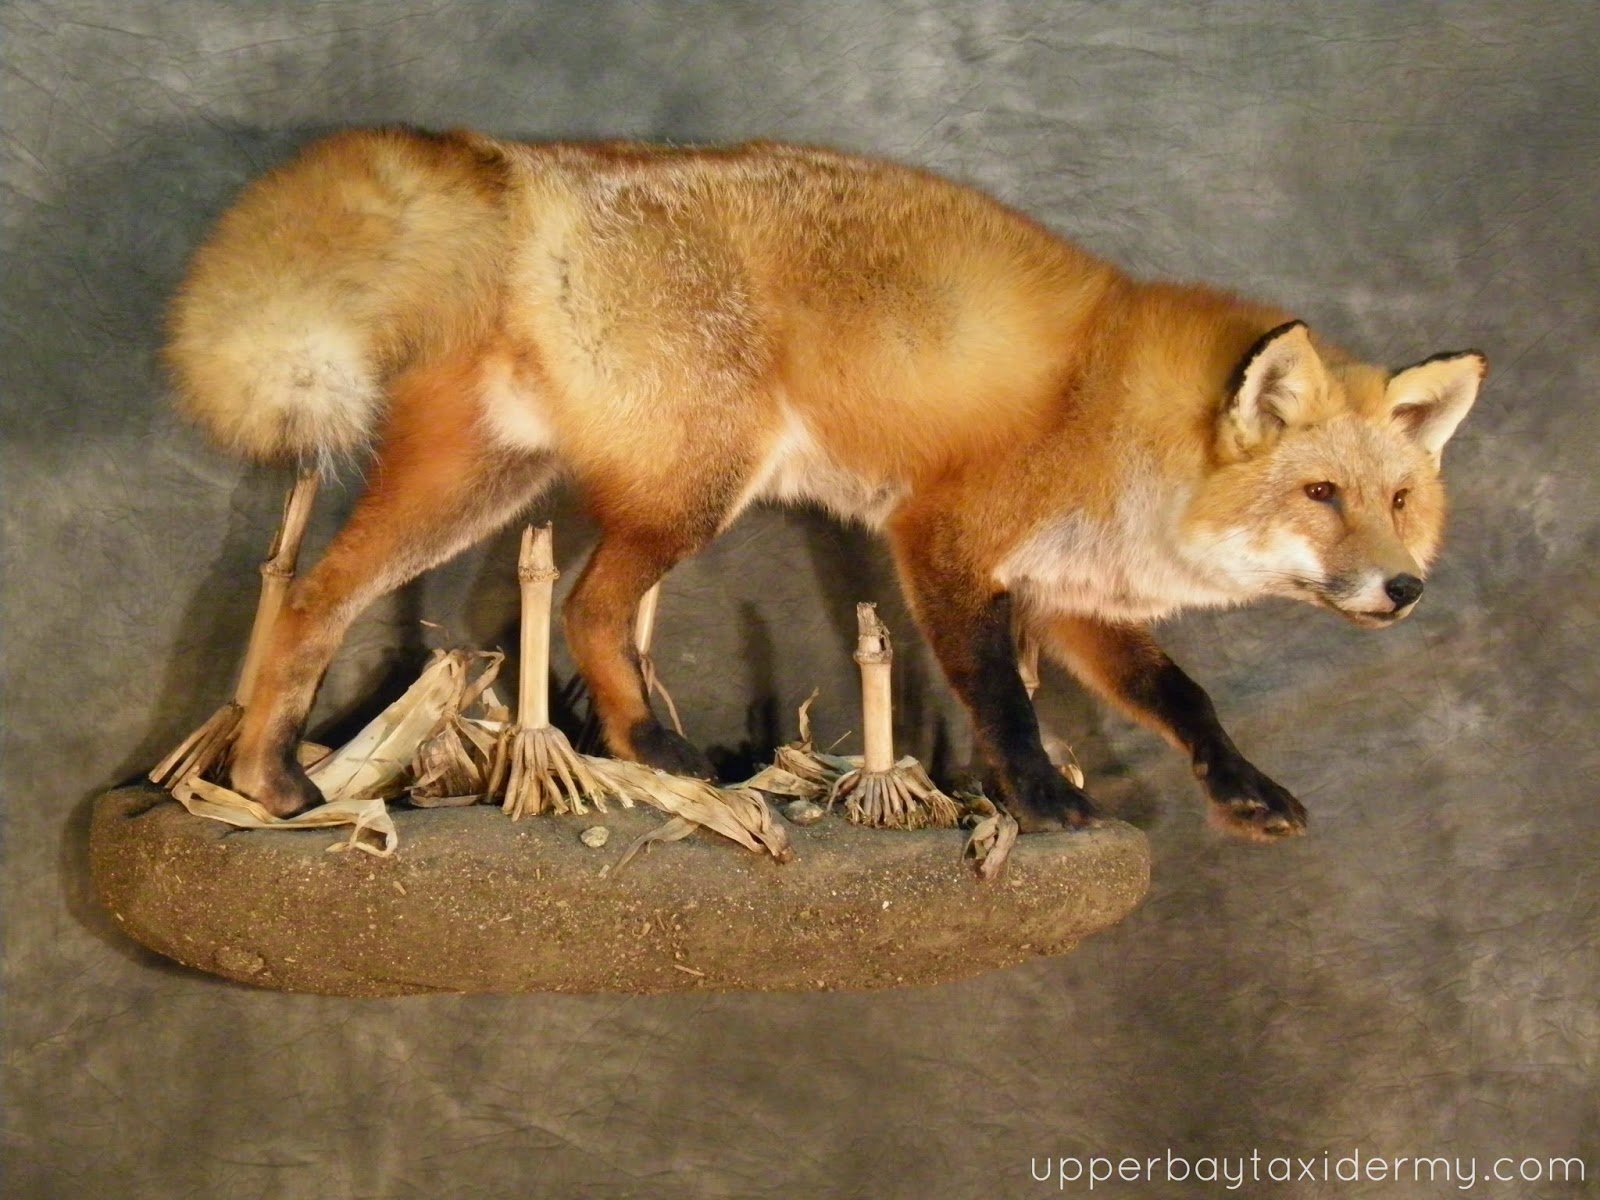  Red Fox Stalking on Wall Mount Base with Cornfield Habitat (Copy)